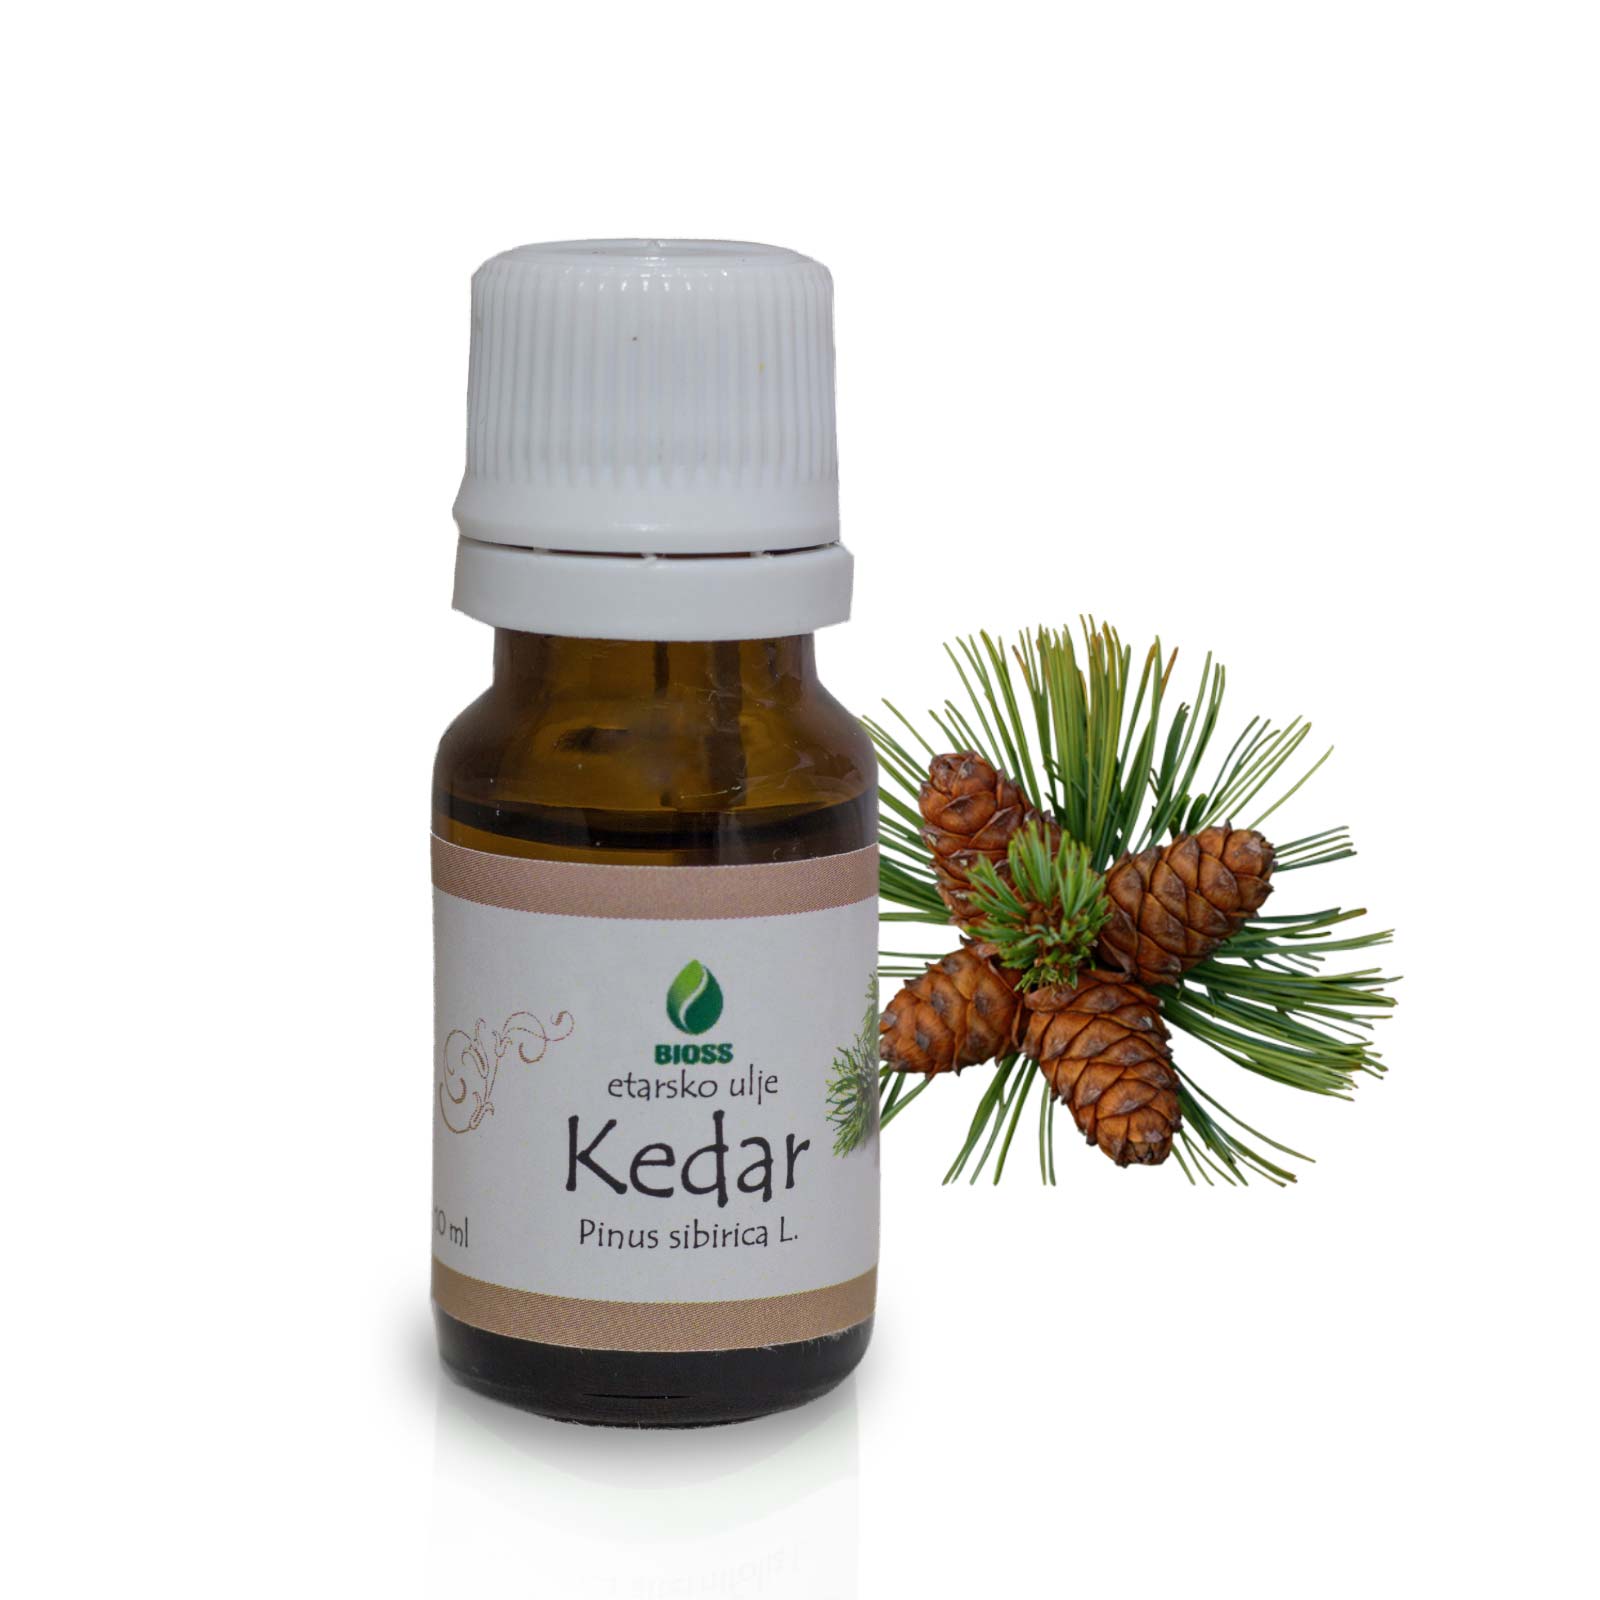 Cedarwood essential oil (Pinus sibirica)